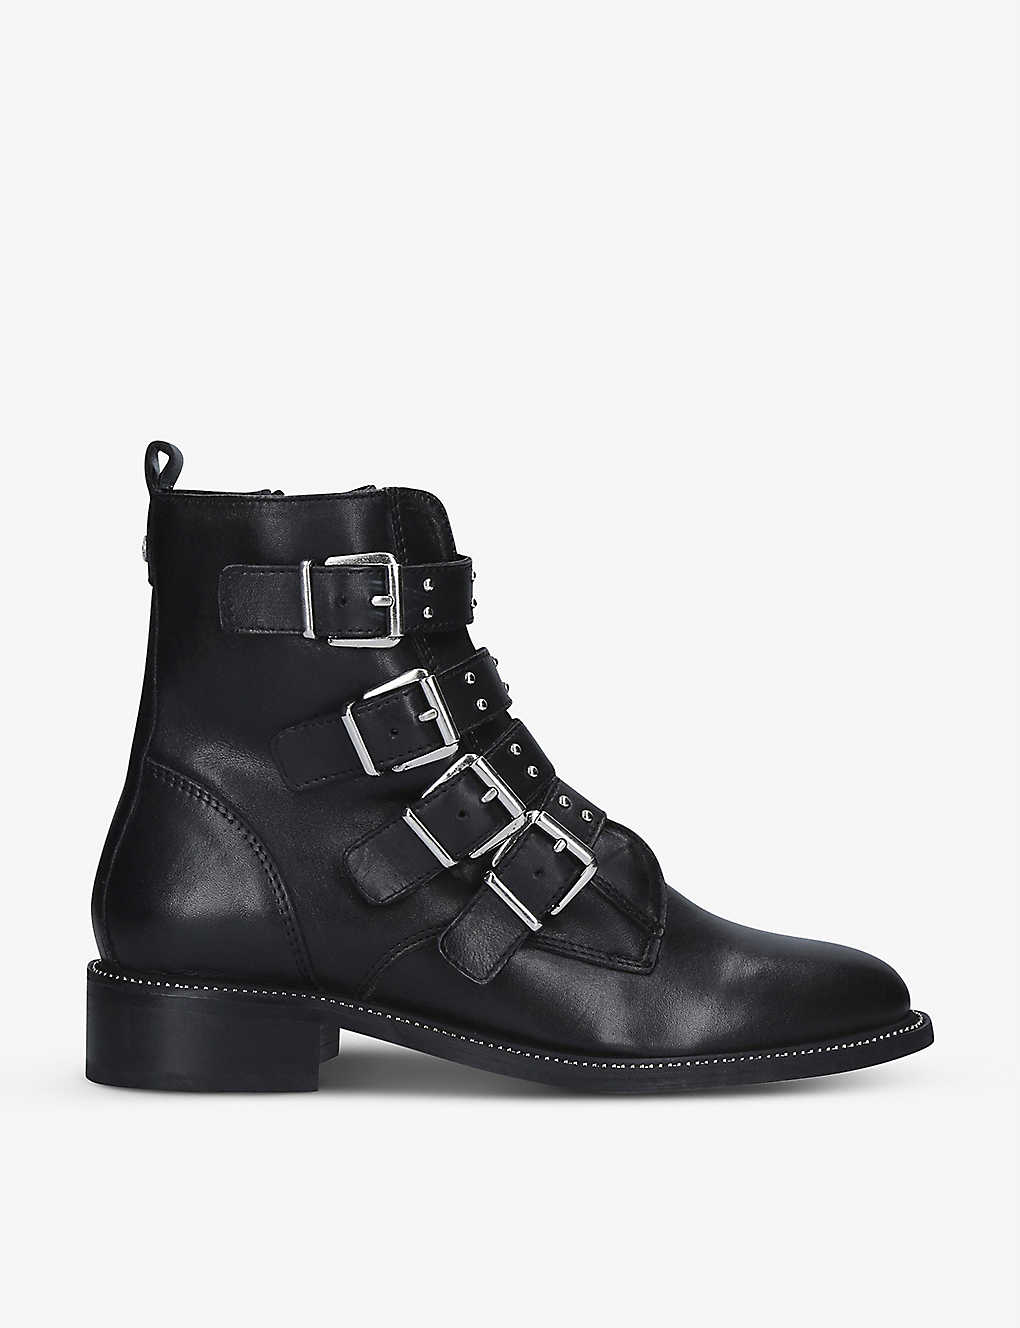 CARVELA - Strap leather ankle boots | Selfridges.com